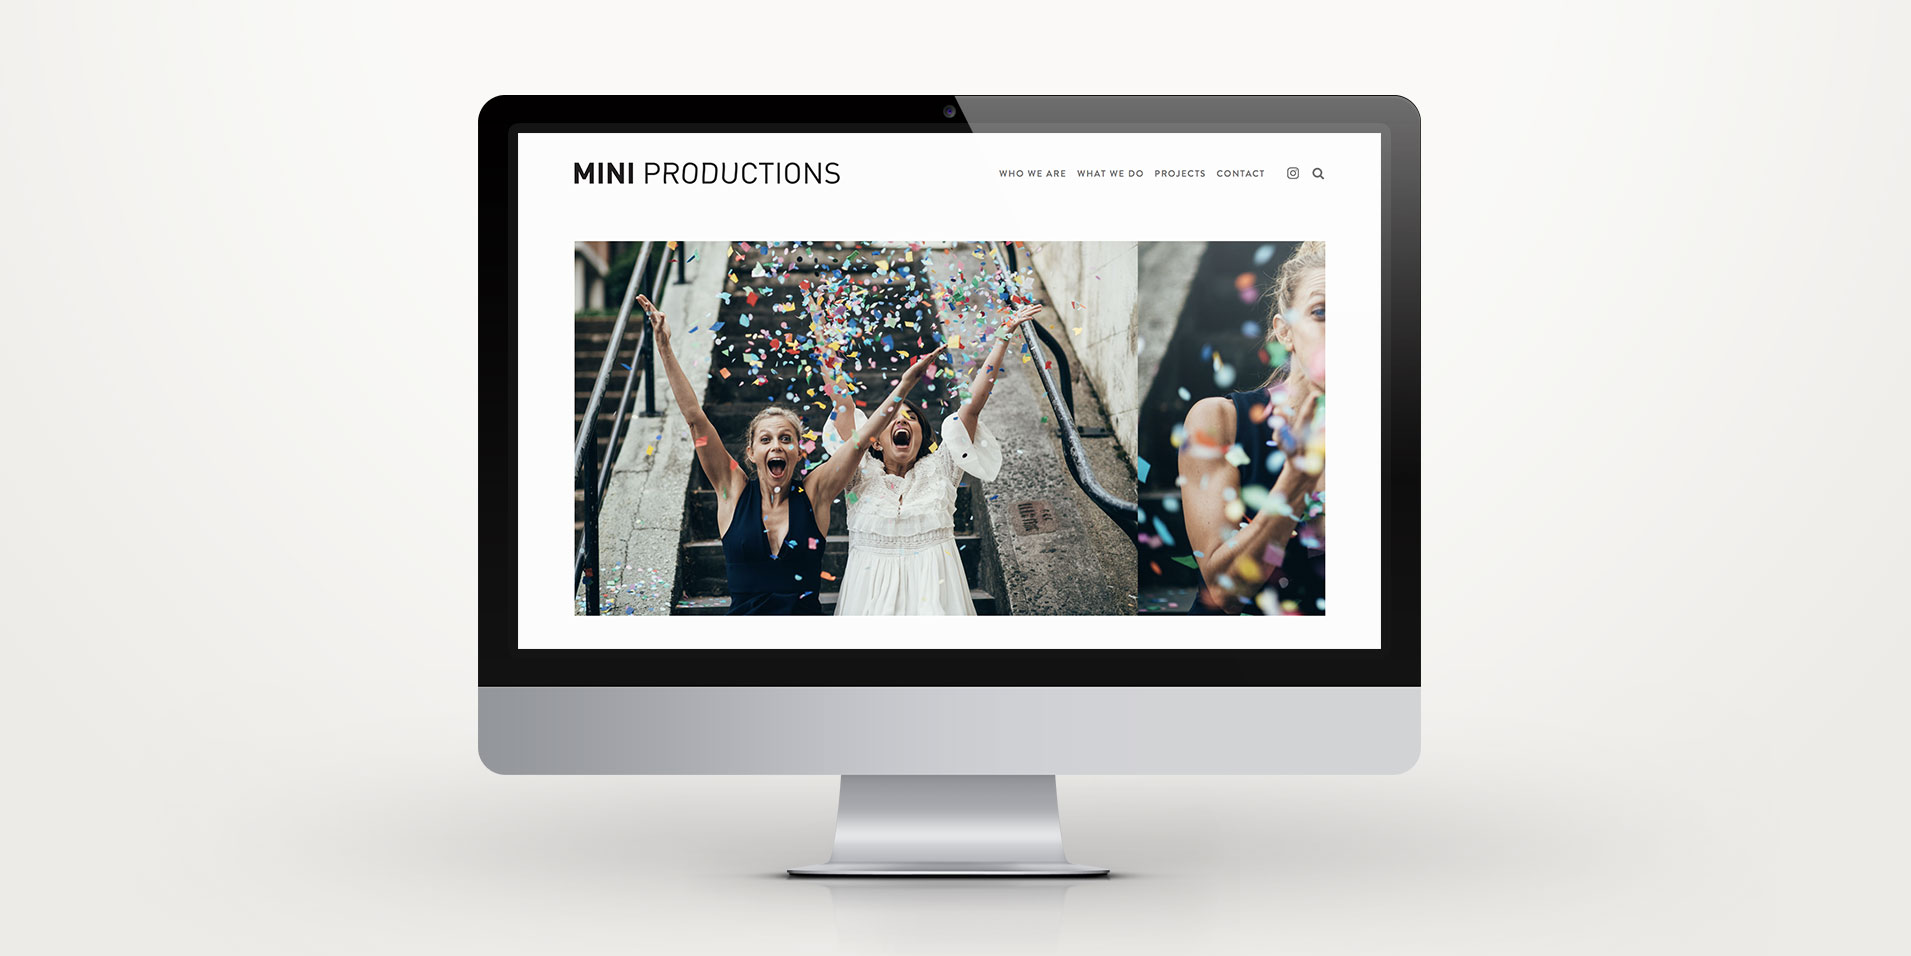 mini-productions-imac-presentation-4.jpg